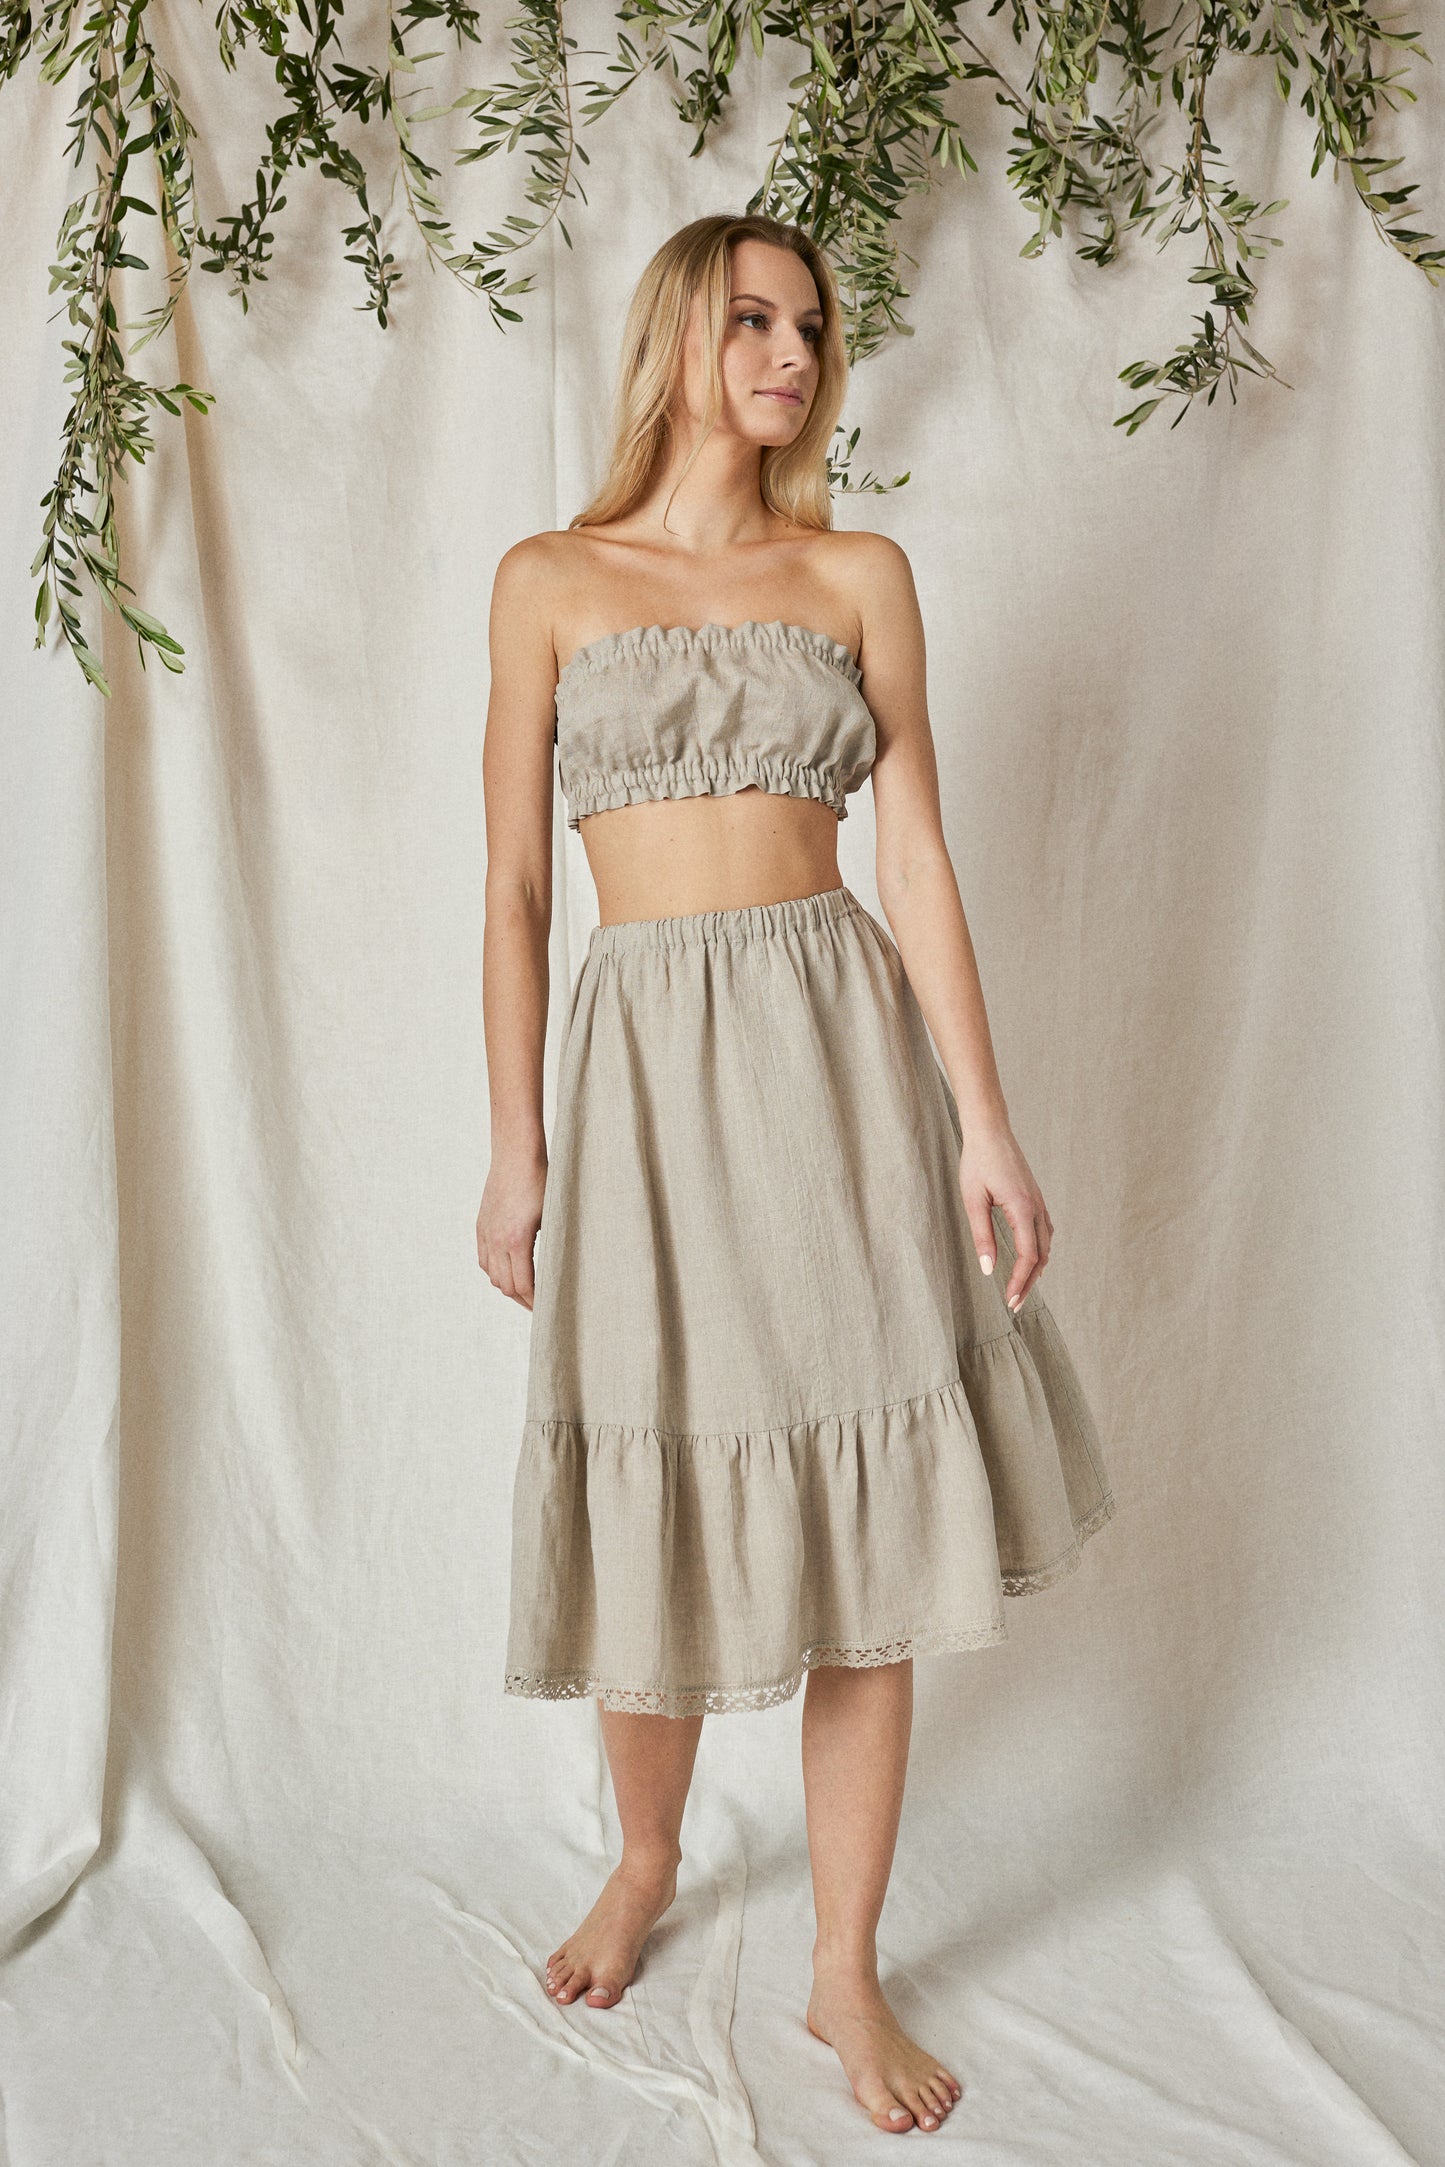 Linen Half Petticoat/ Underskirt 